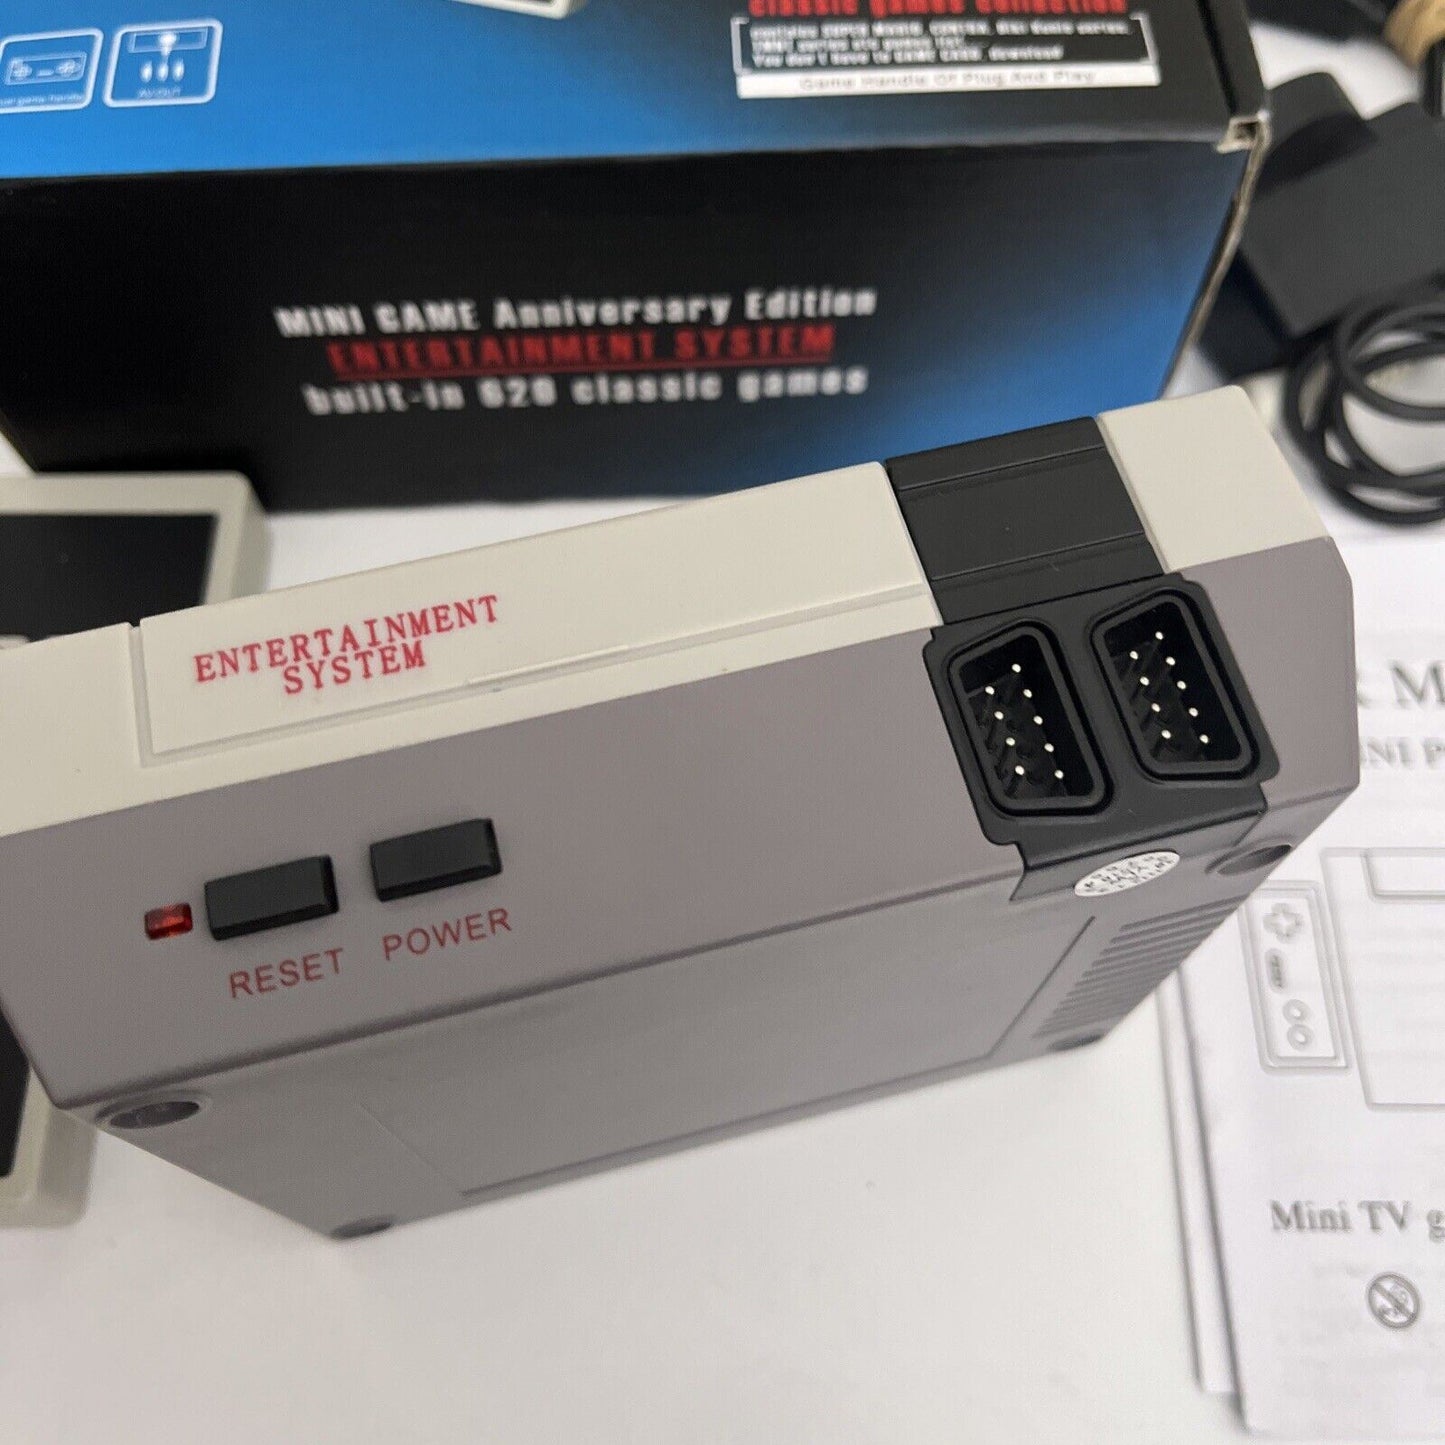 Classic Mini Retro Game Console Built-in 620 Games + 2 NES Classic Controller